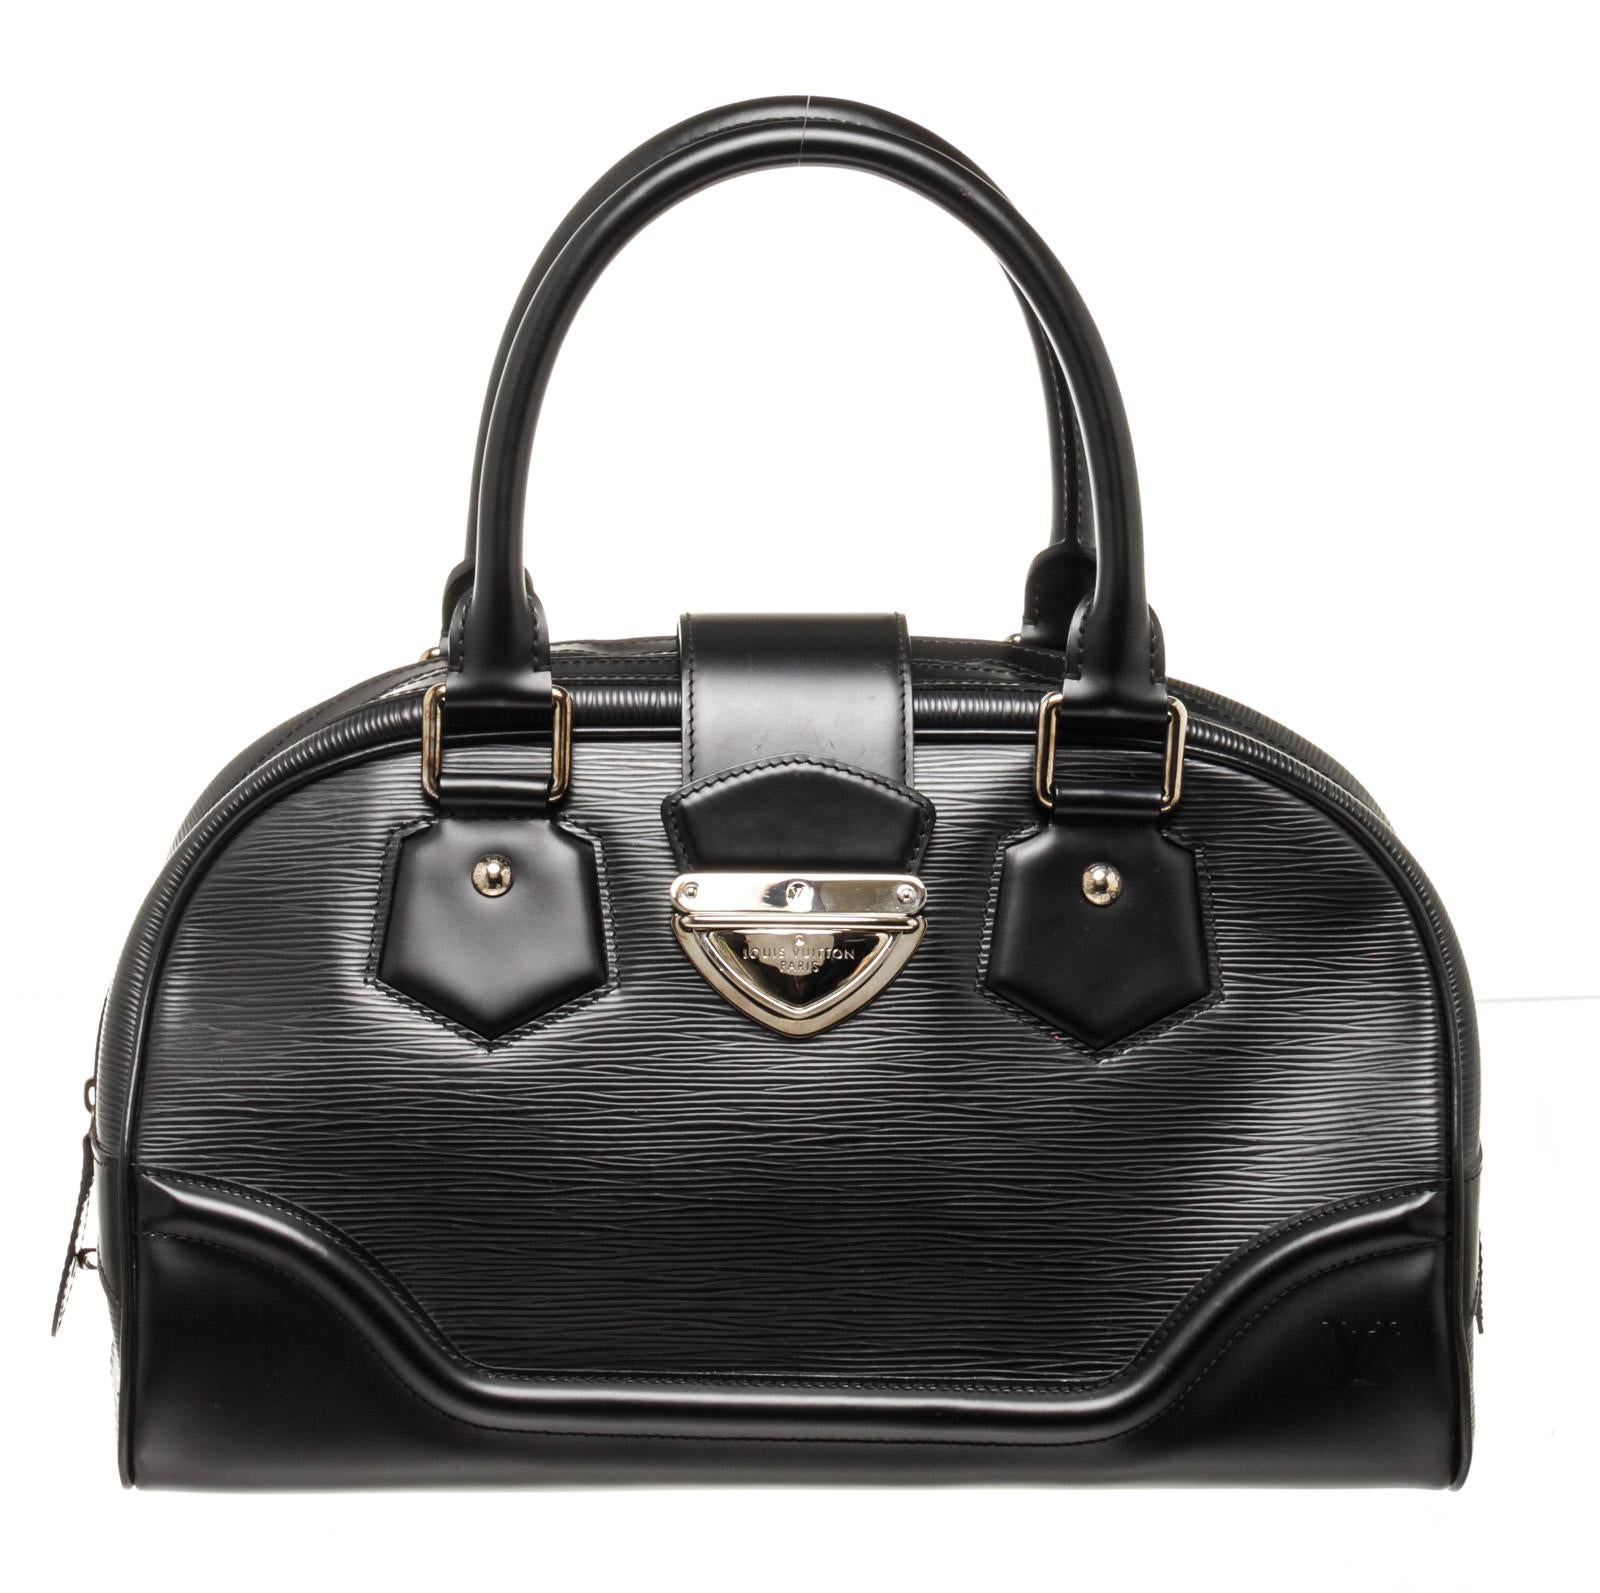 Louis Vuitton Black Epi Leather Montaigne GM Shoulder Bag with flap zip top closure. Interior is canvas lined with side slip pocket.

49107MSC